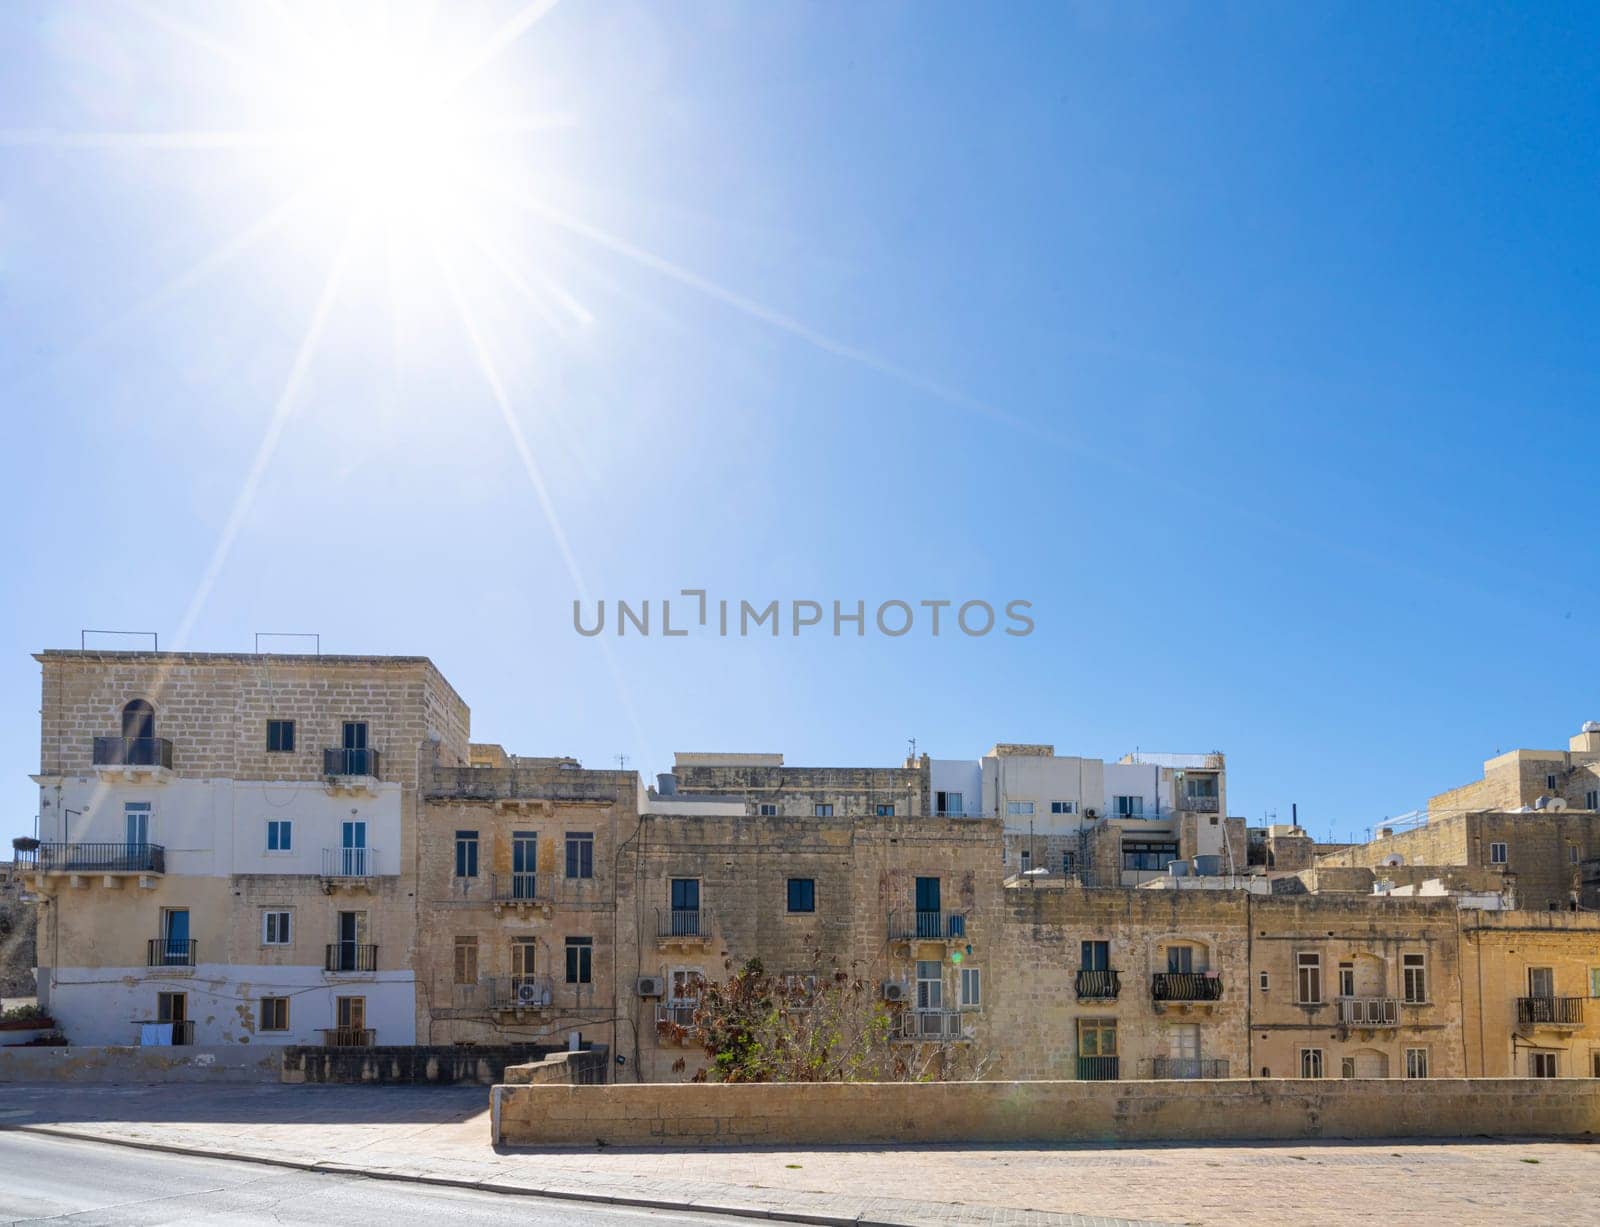 Old buildings in Valletta, Malta by sergiodv